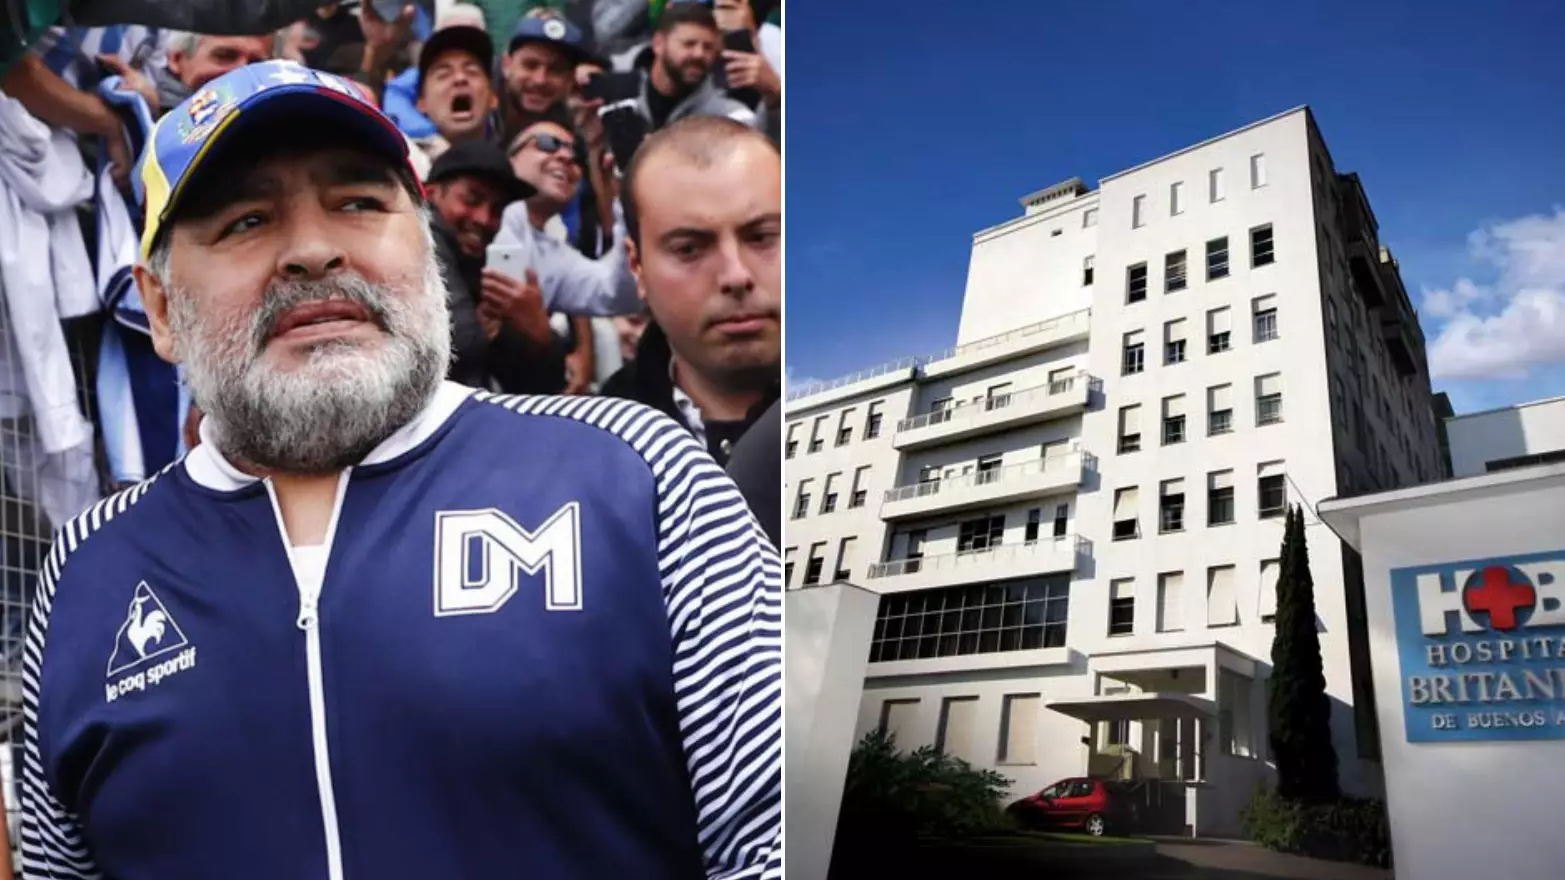 Diego Maradona To Undergo Emergency Surgery To Remove Blood Clot On Brain